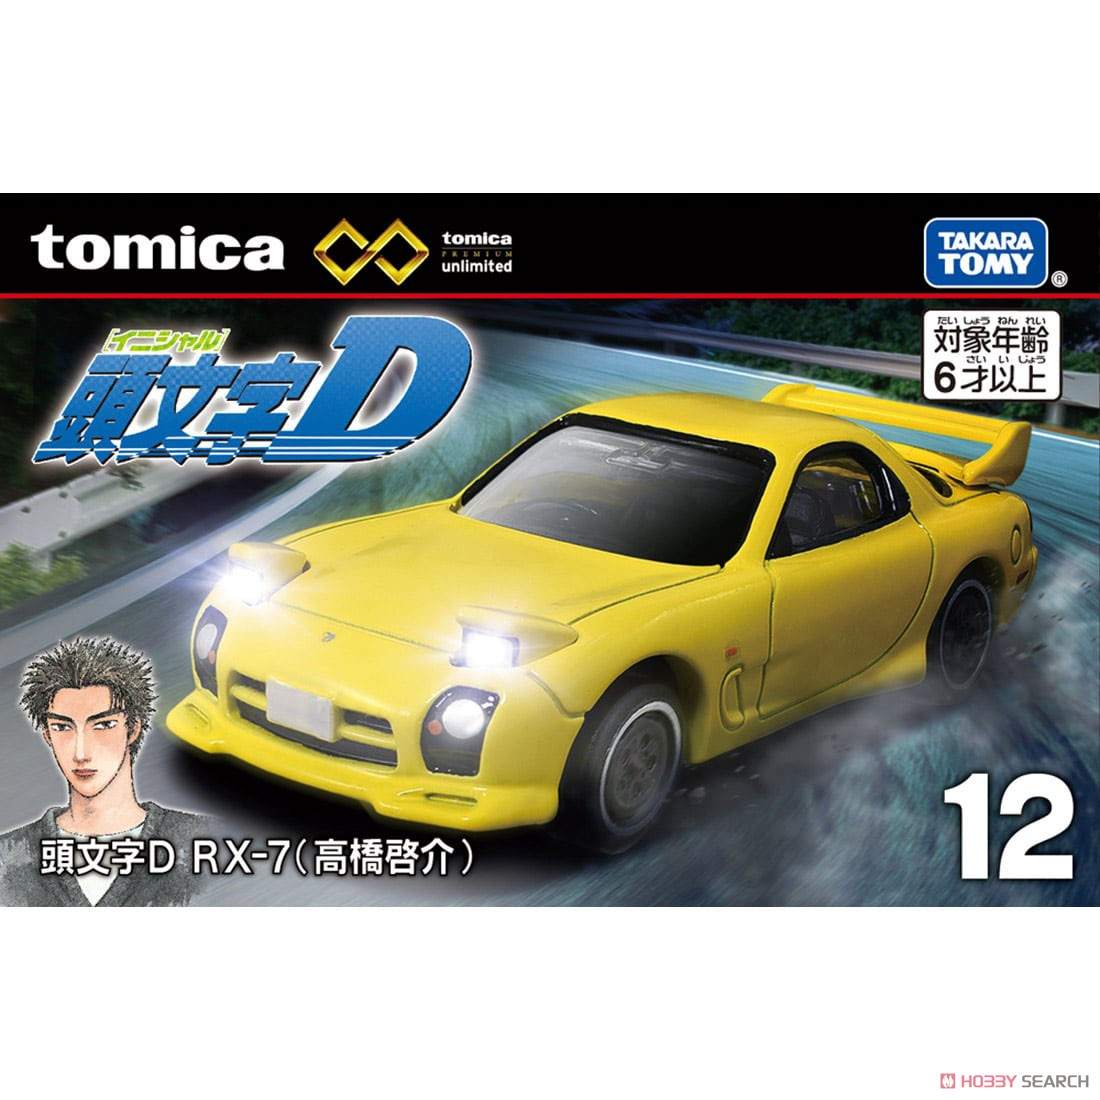 Tomica Premium unlimited 12 Initial D RX-7 Keisuke Takahashi